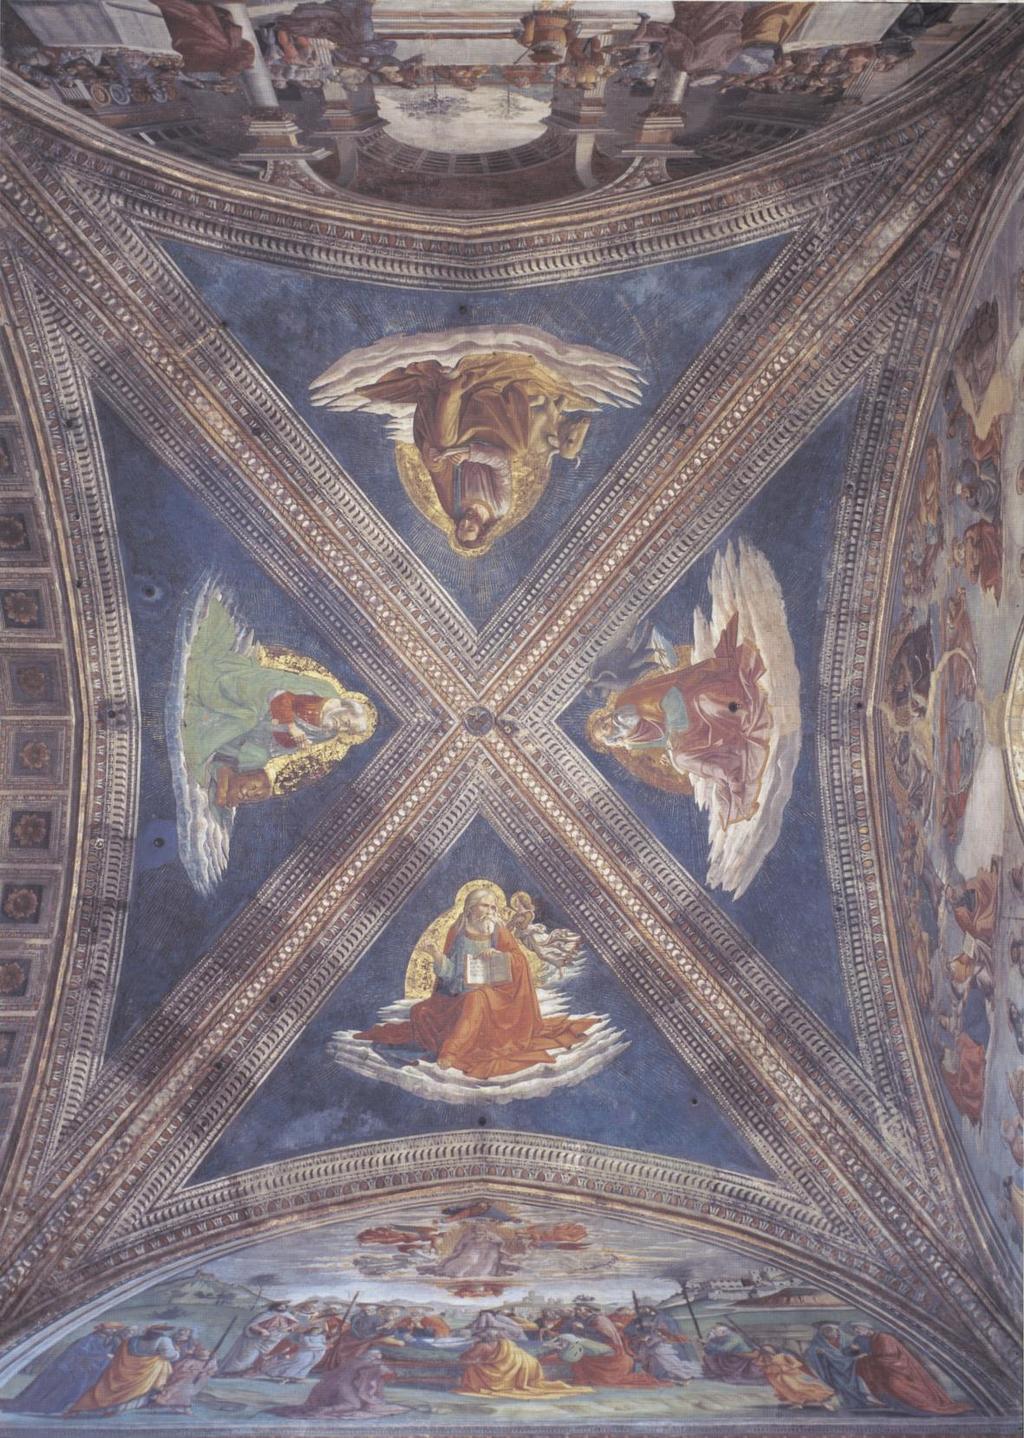 Plate 16: Domenico Bigordi called Ghirlandaio, and workshop, Four Evangelists,